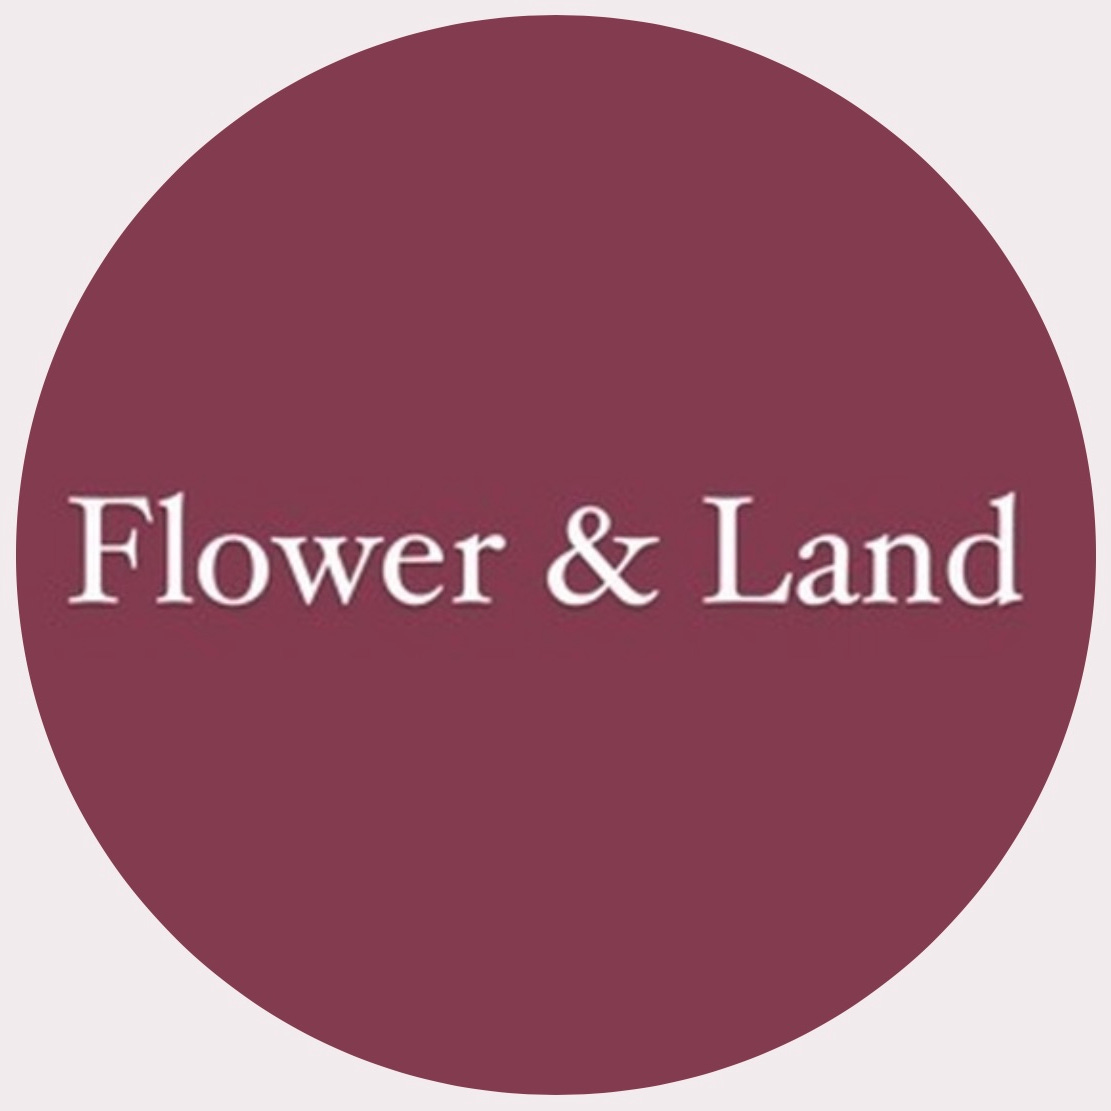 Flower & Land